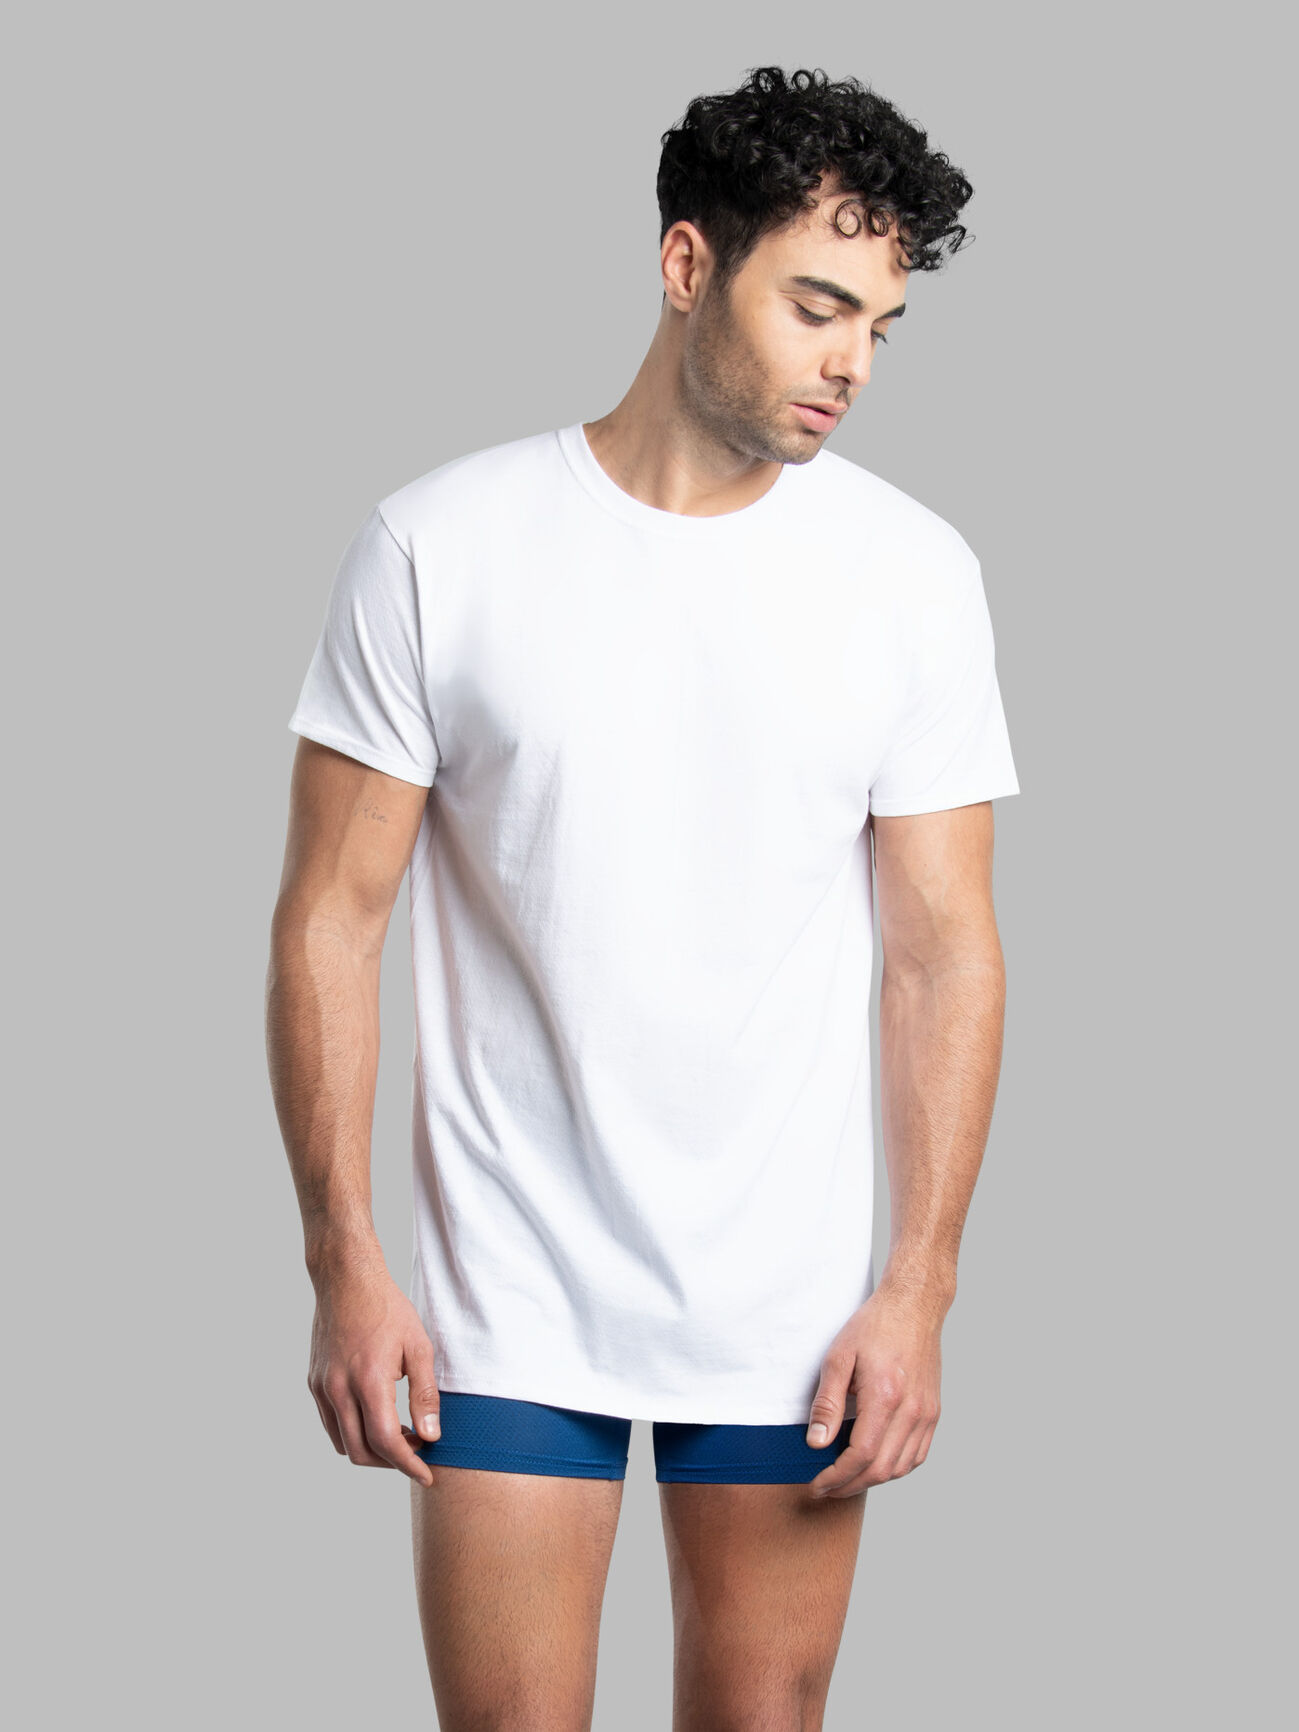 Short Sleeve Shirts, Men's Short Sleeve Shirts & Cotton Shirts